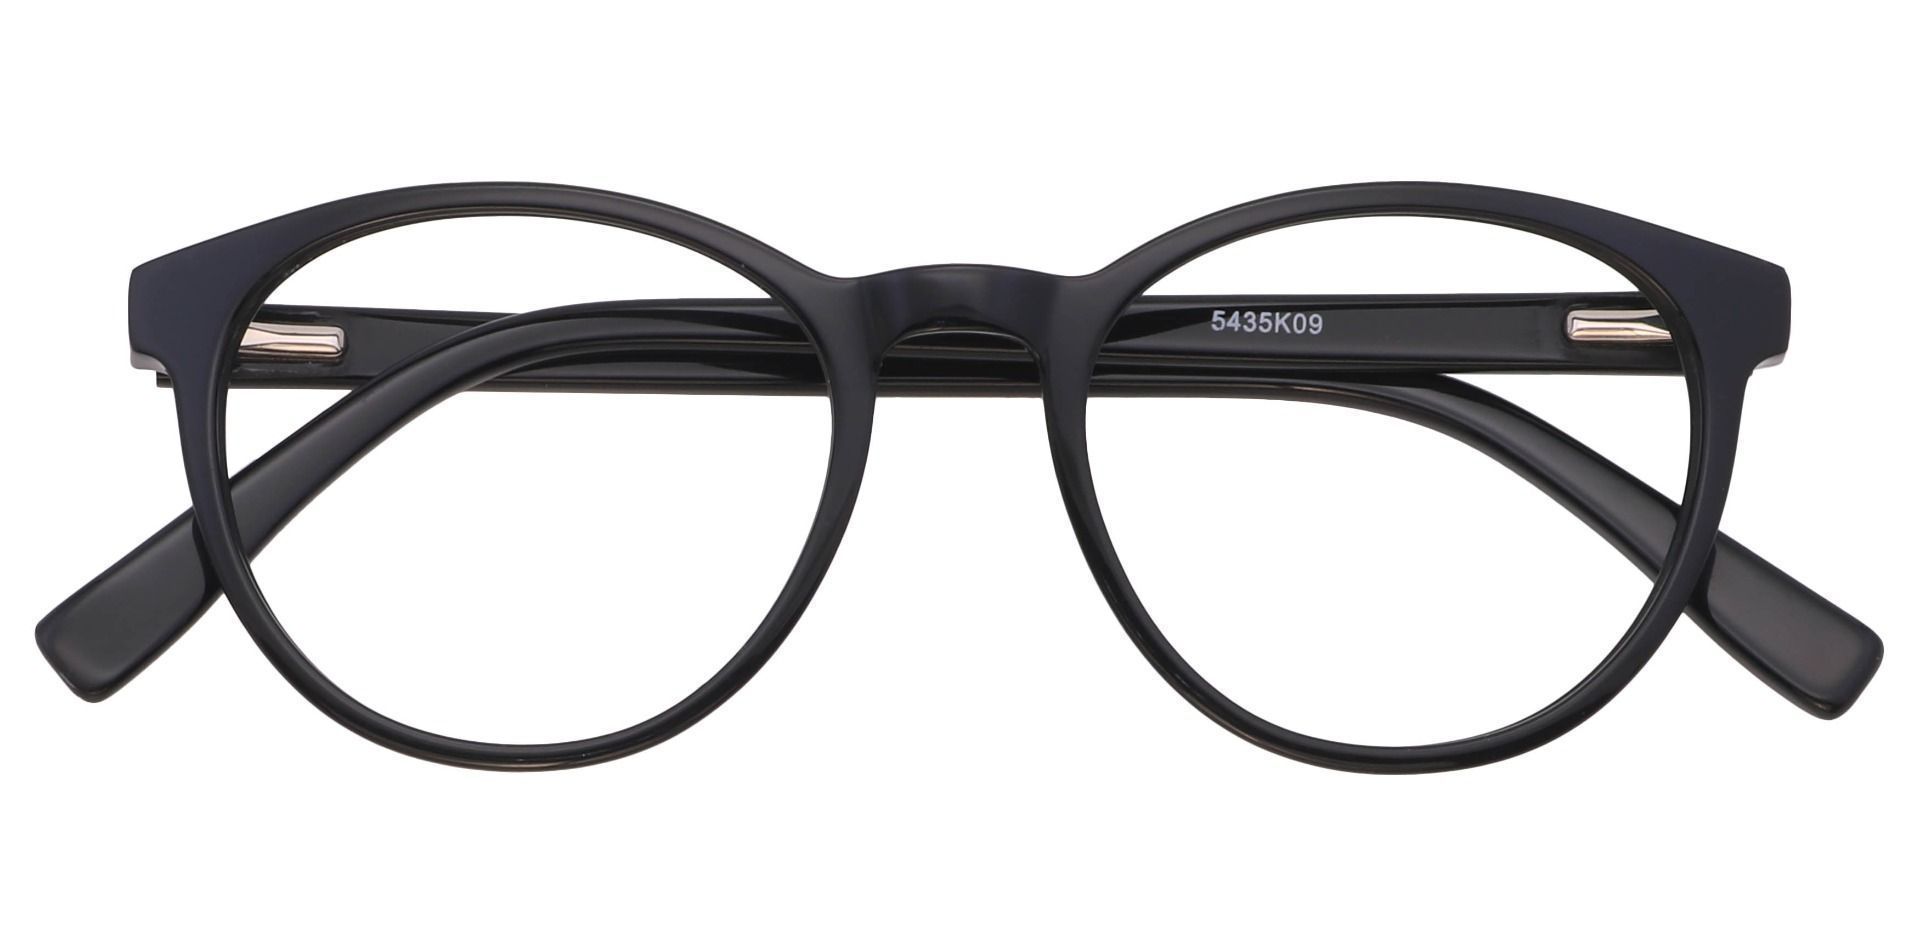 Stellar Oval Lined Bifocal Glasses - Black